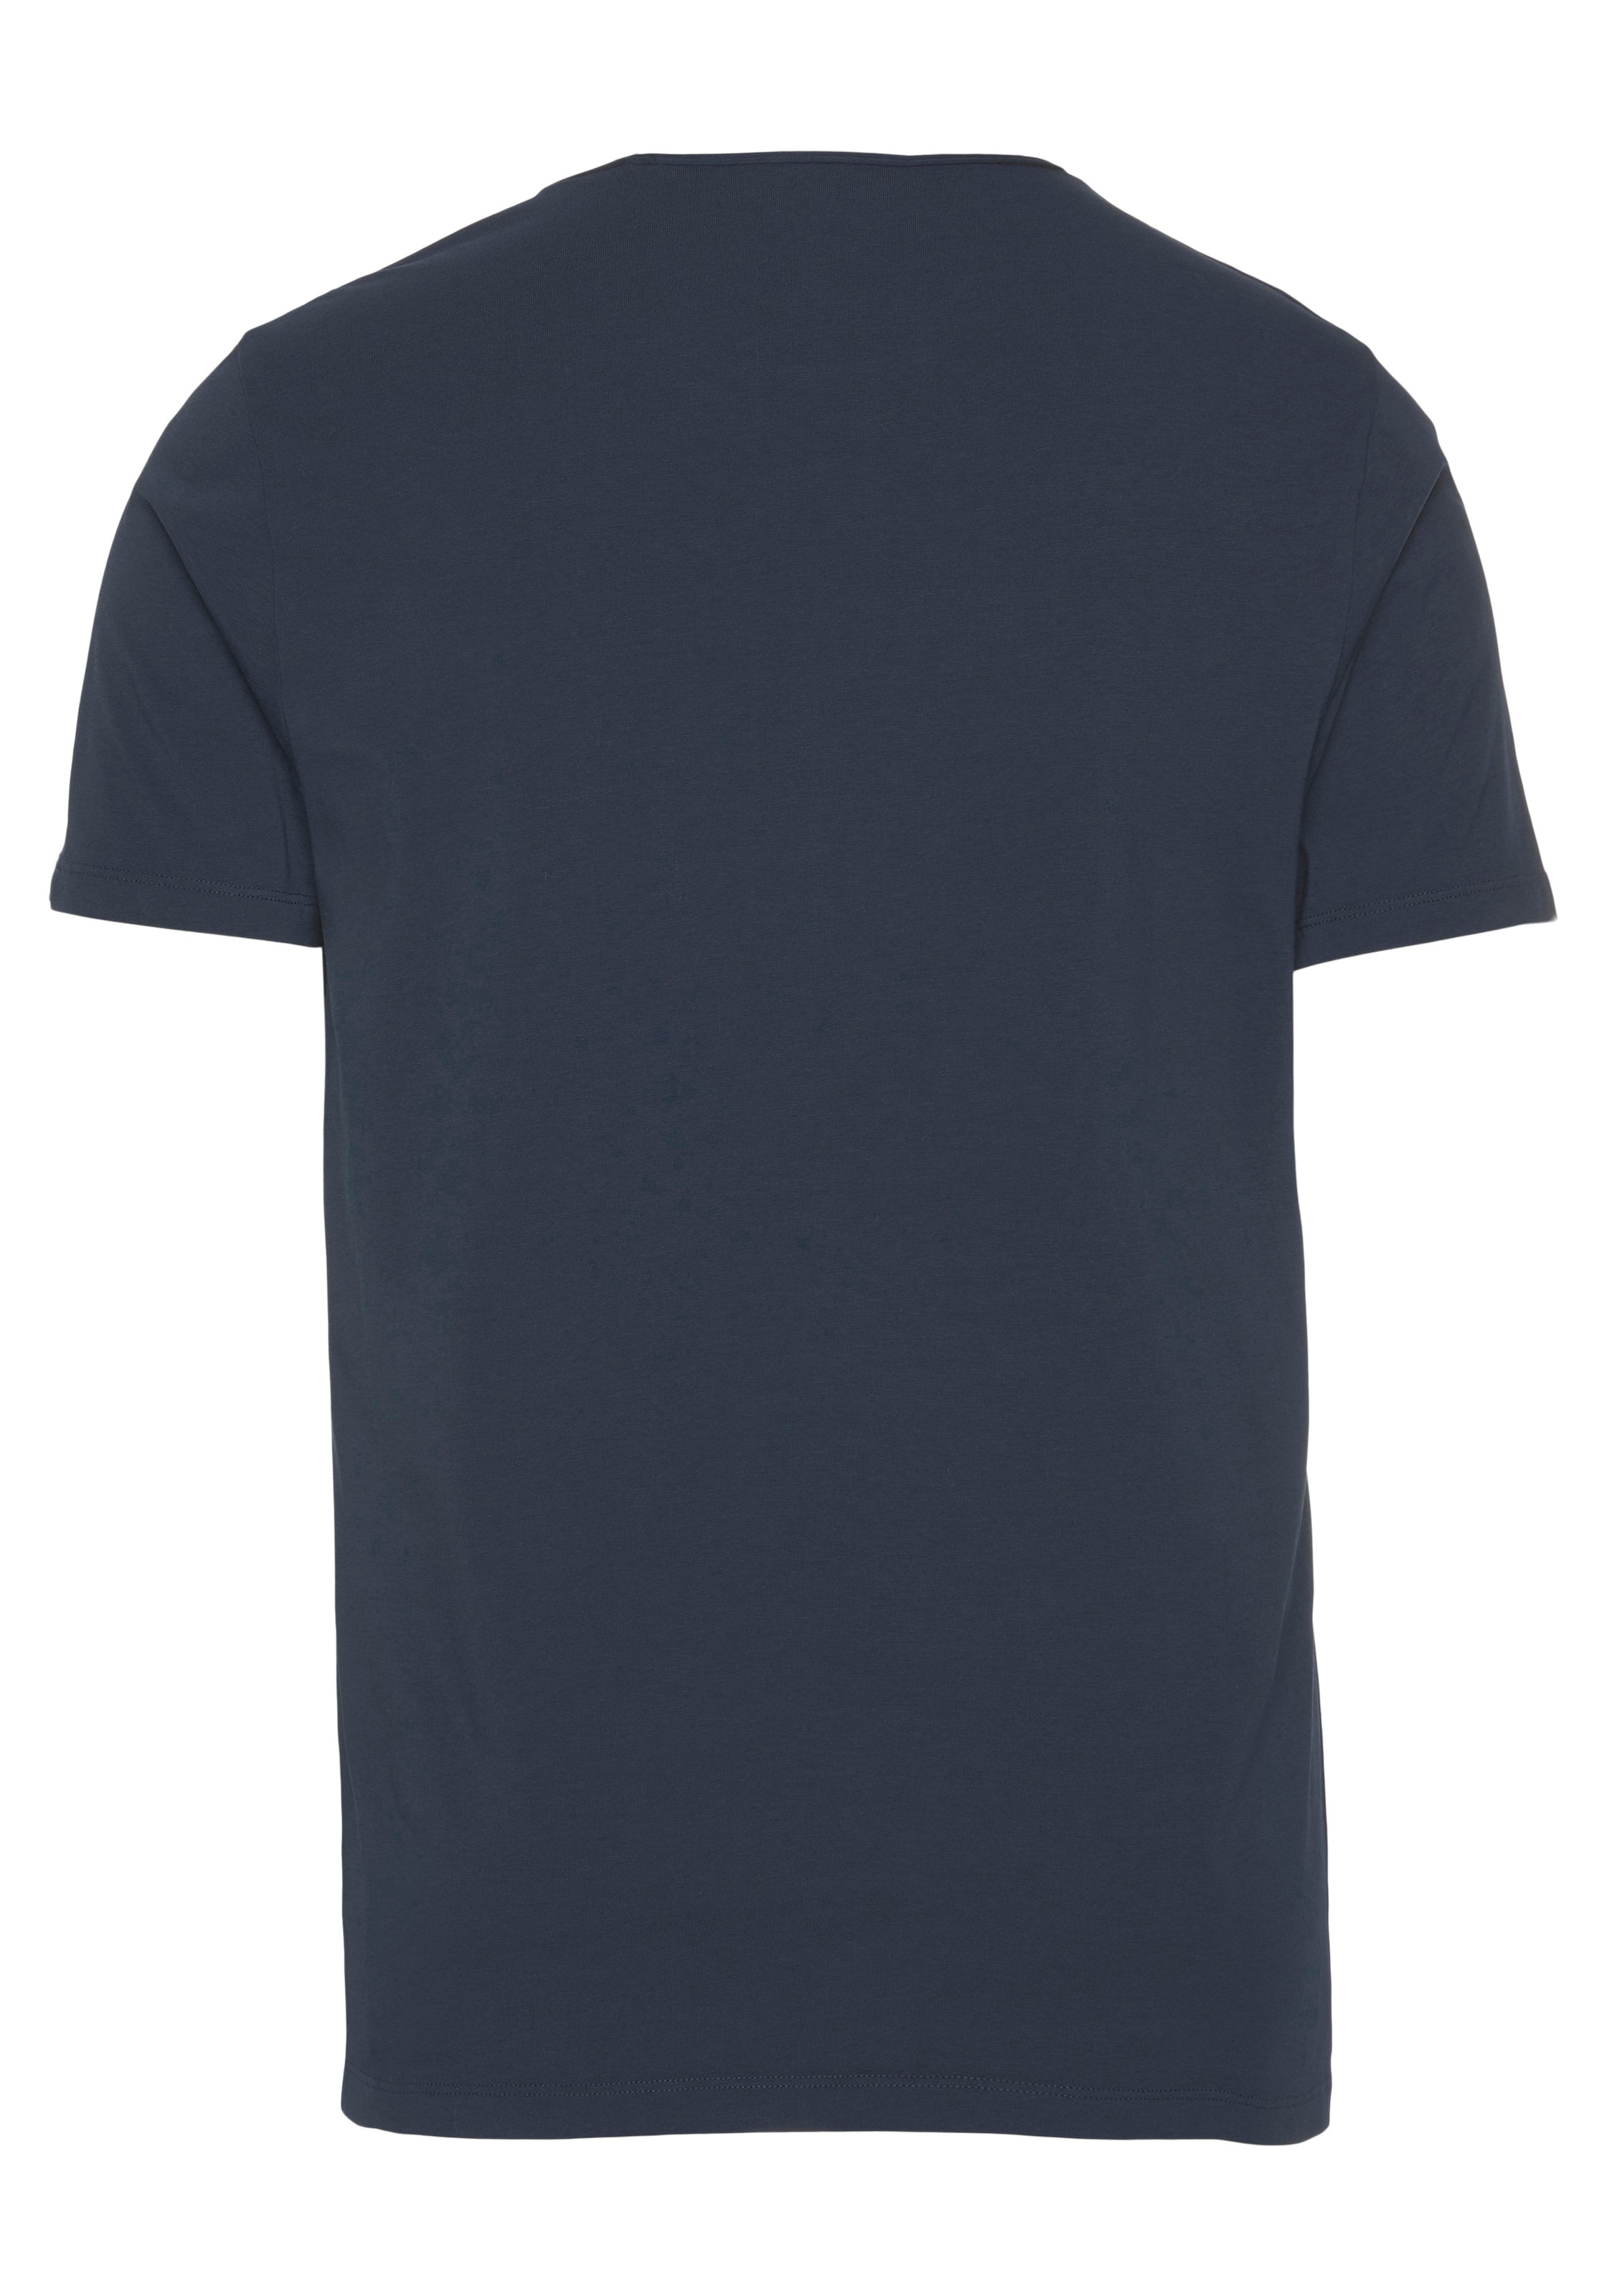 OTTO aus fit«, bei online Jersey bestellen feinem »Level body T-Shirt Five OLYMP